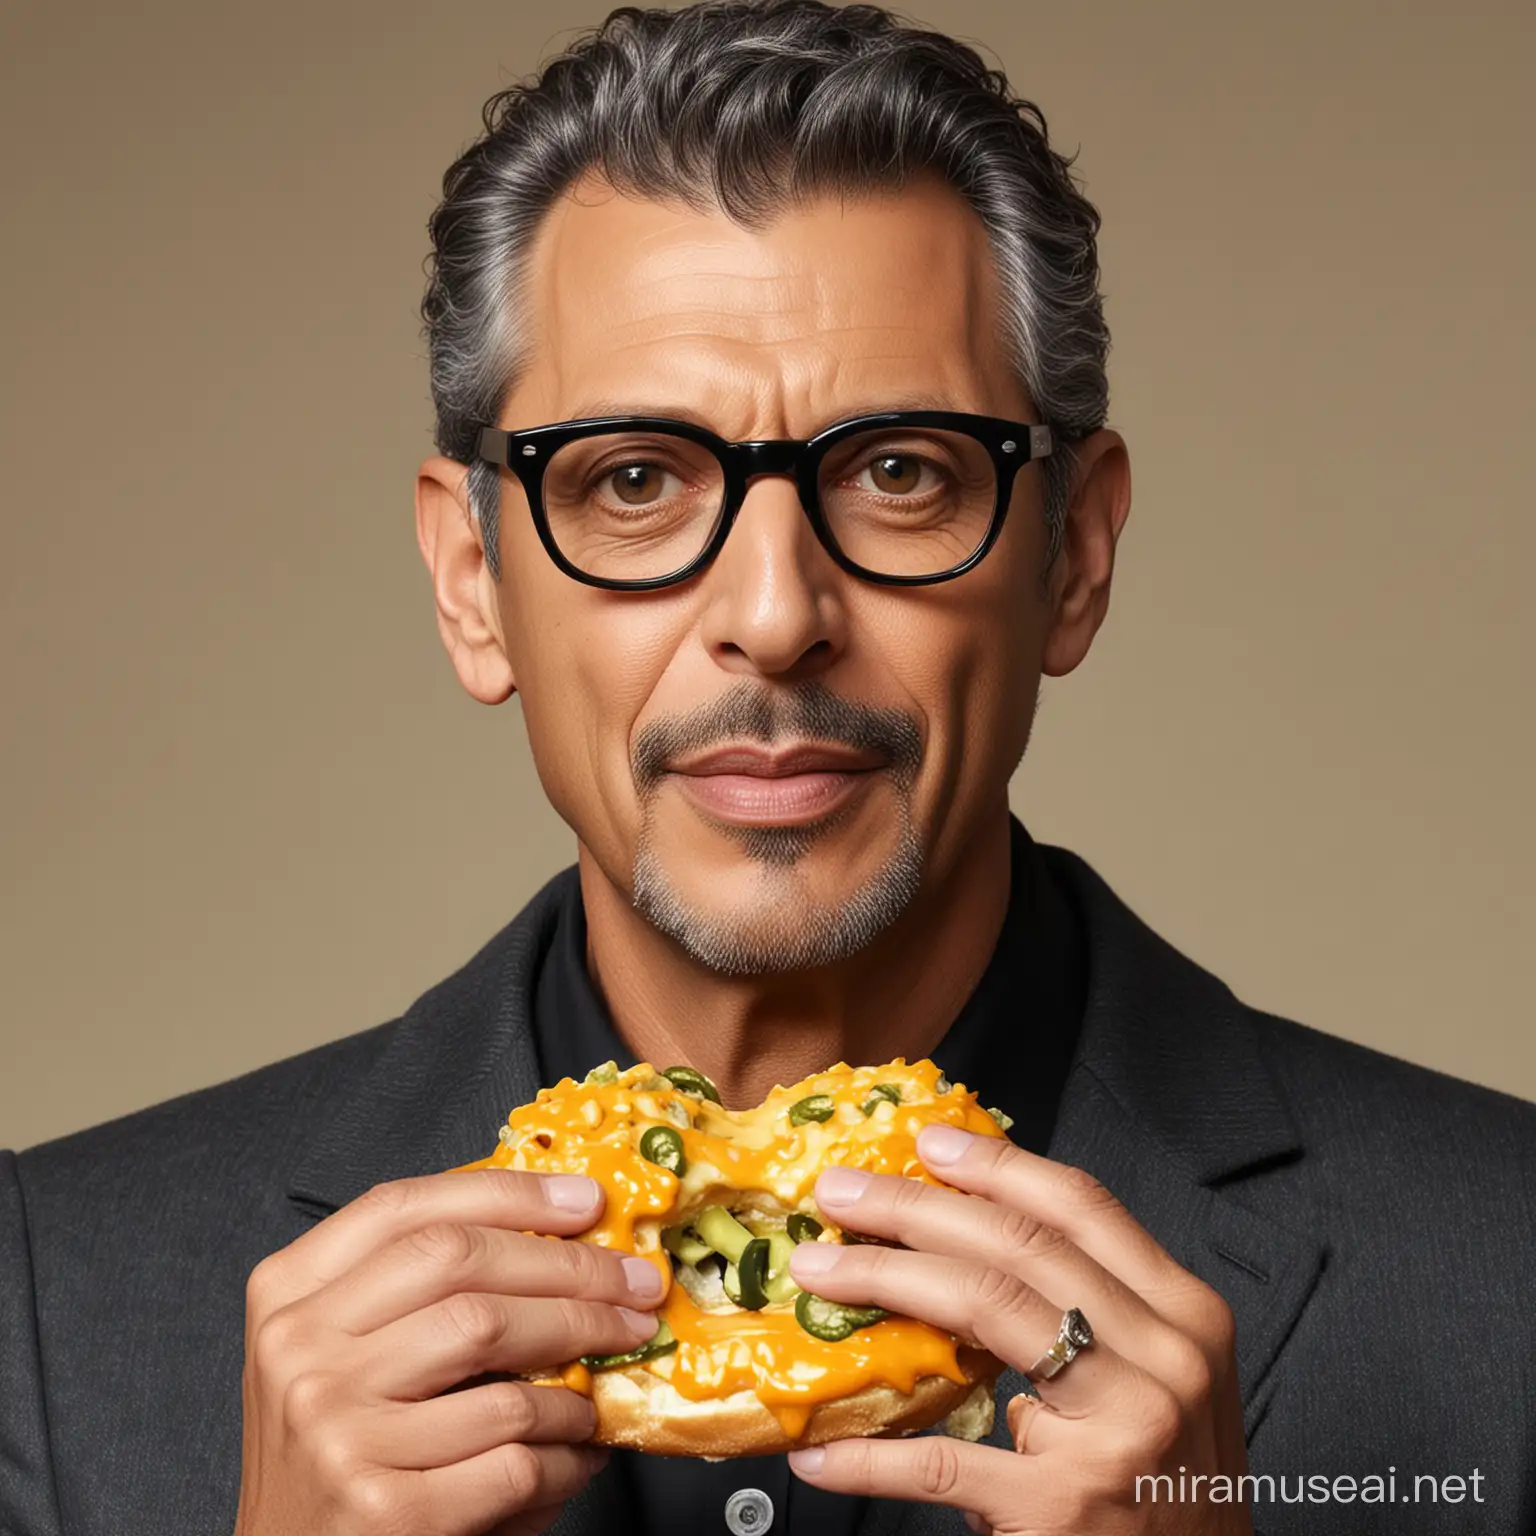 Jeff Goldblum Enjoying a CheddarJalapeno Bagel